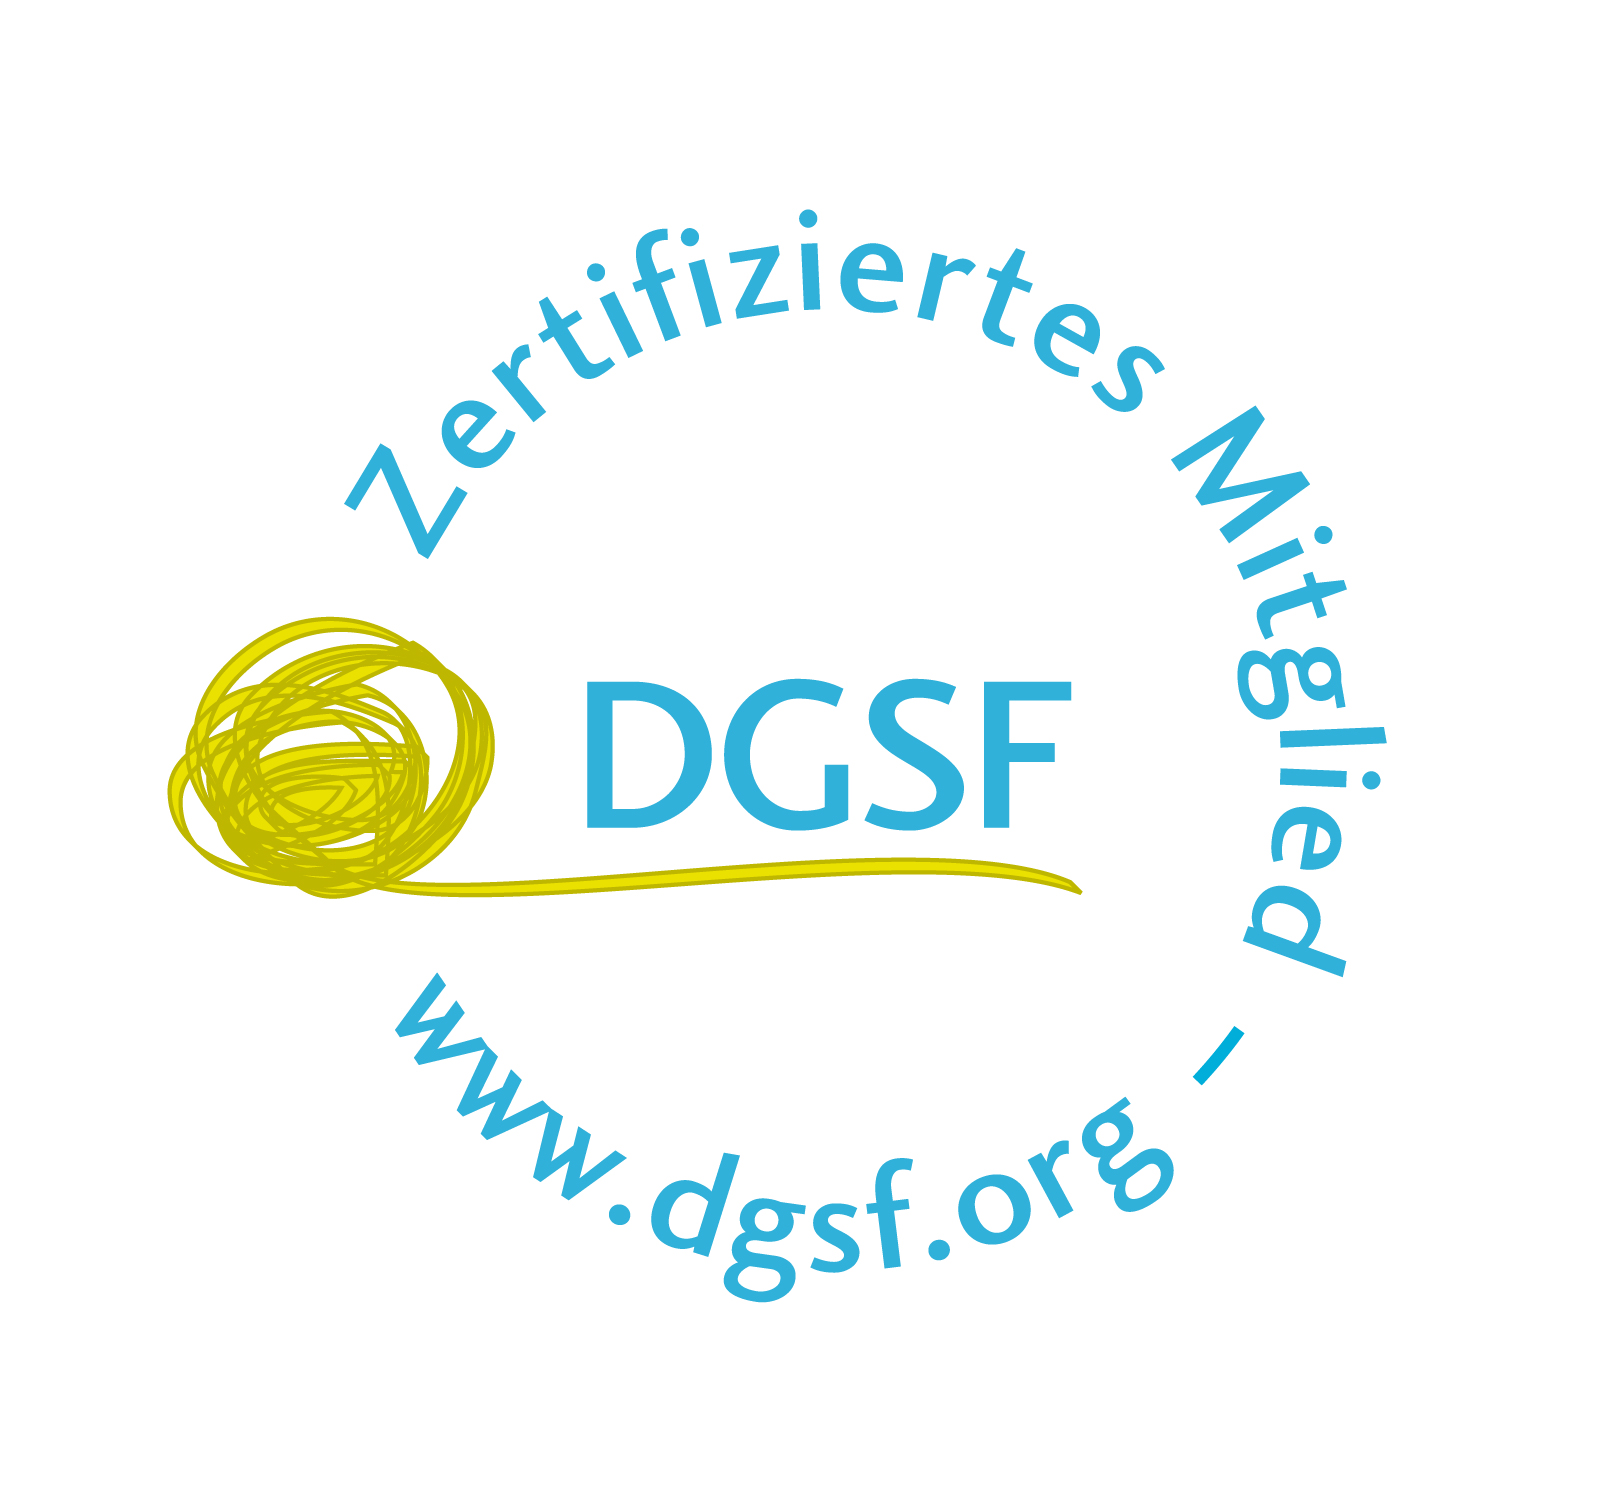 Das DGSF-Siegel